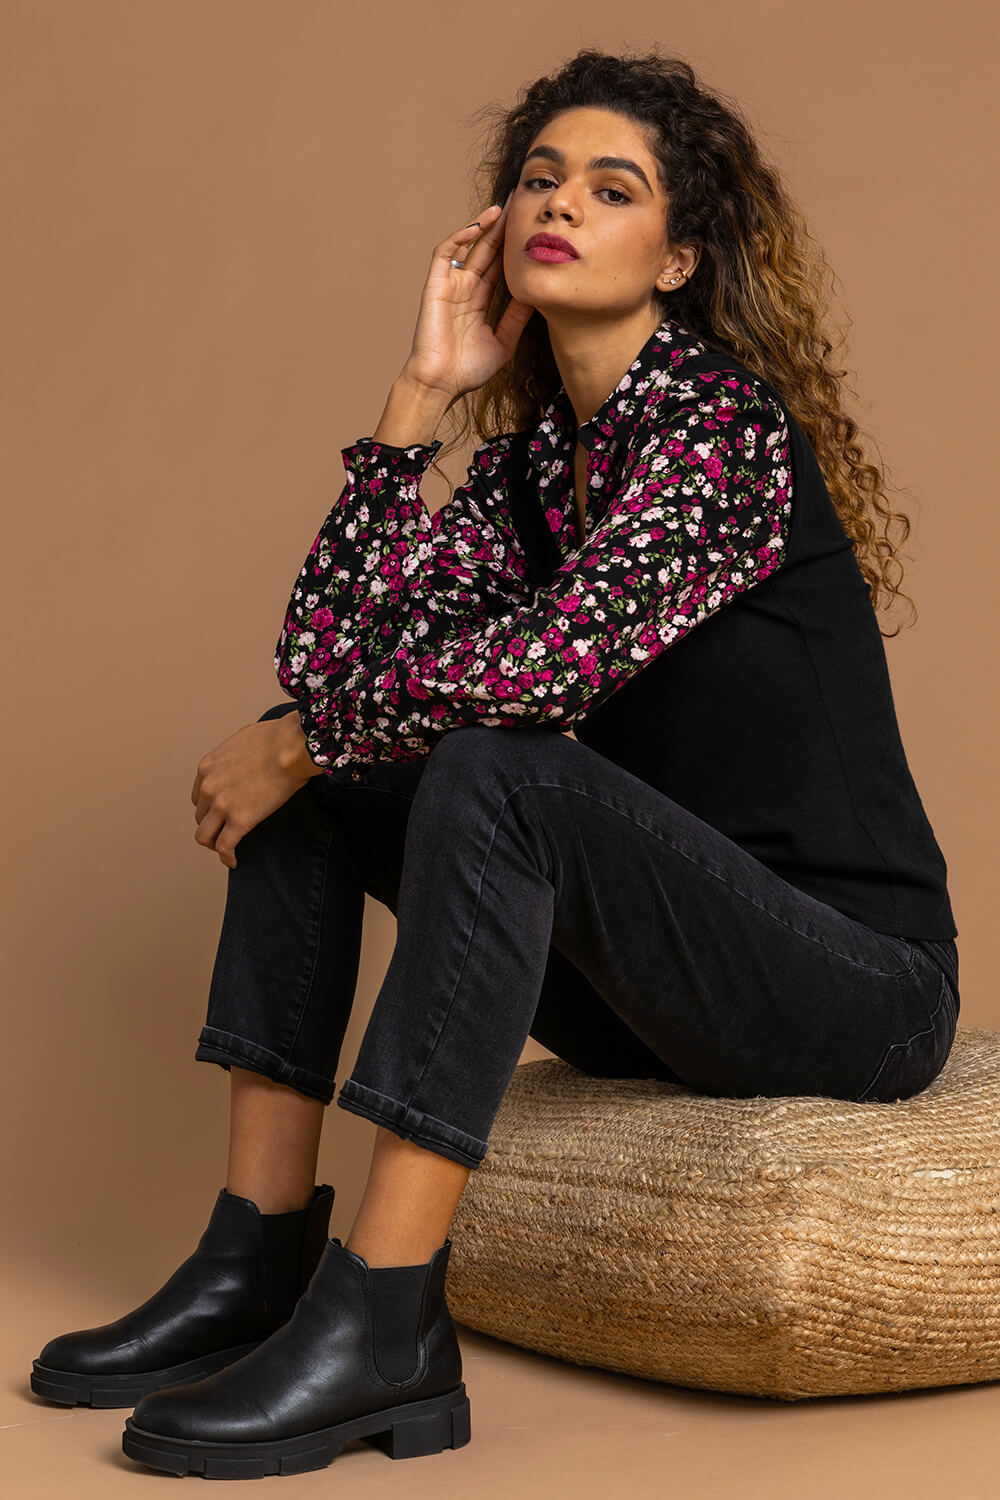 Black Floral Print Sweater Vest Long Sleeve Top, Image 4 of 5